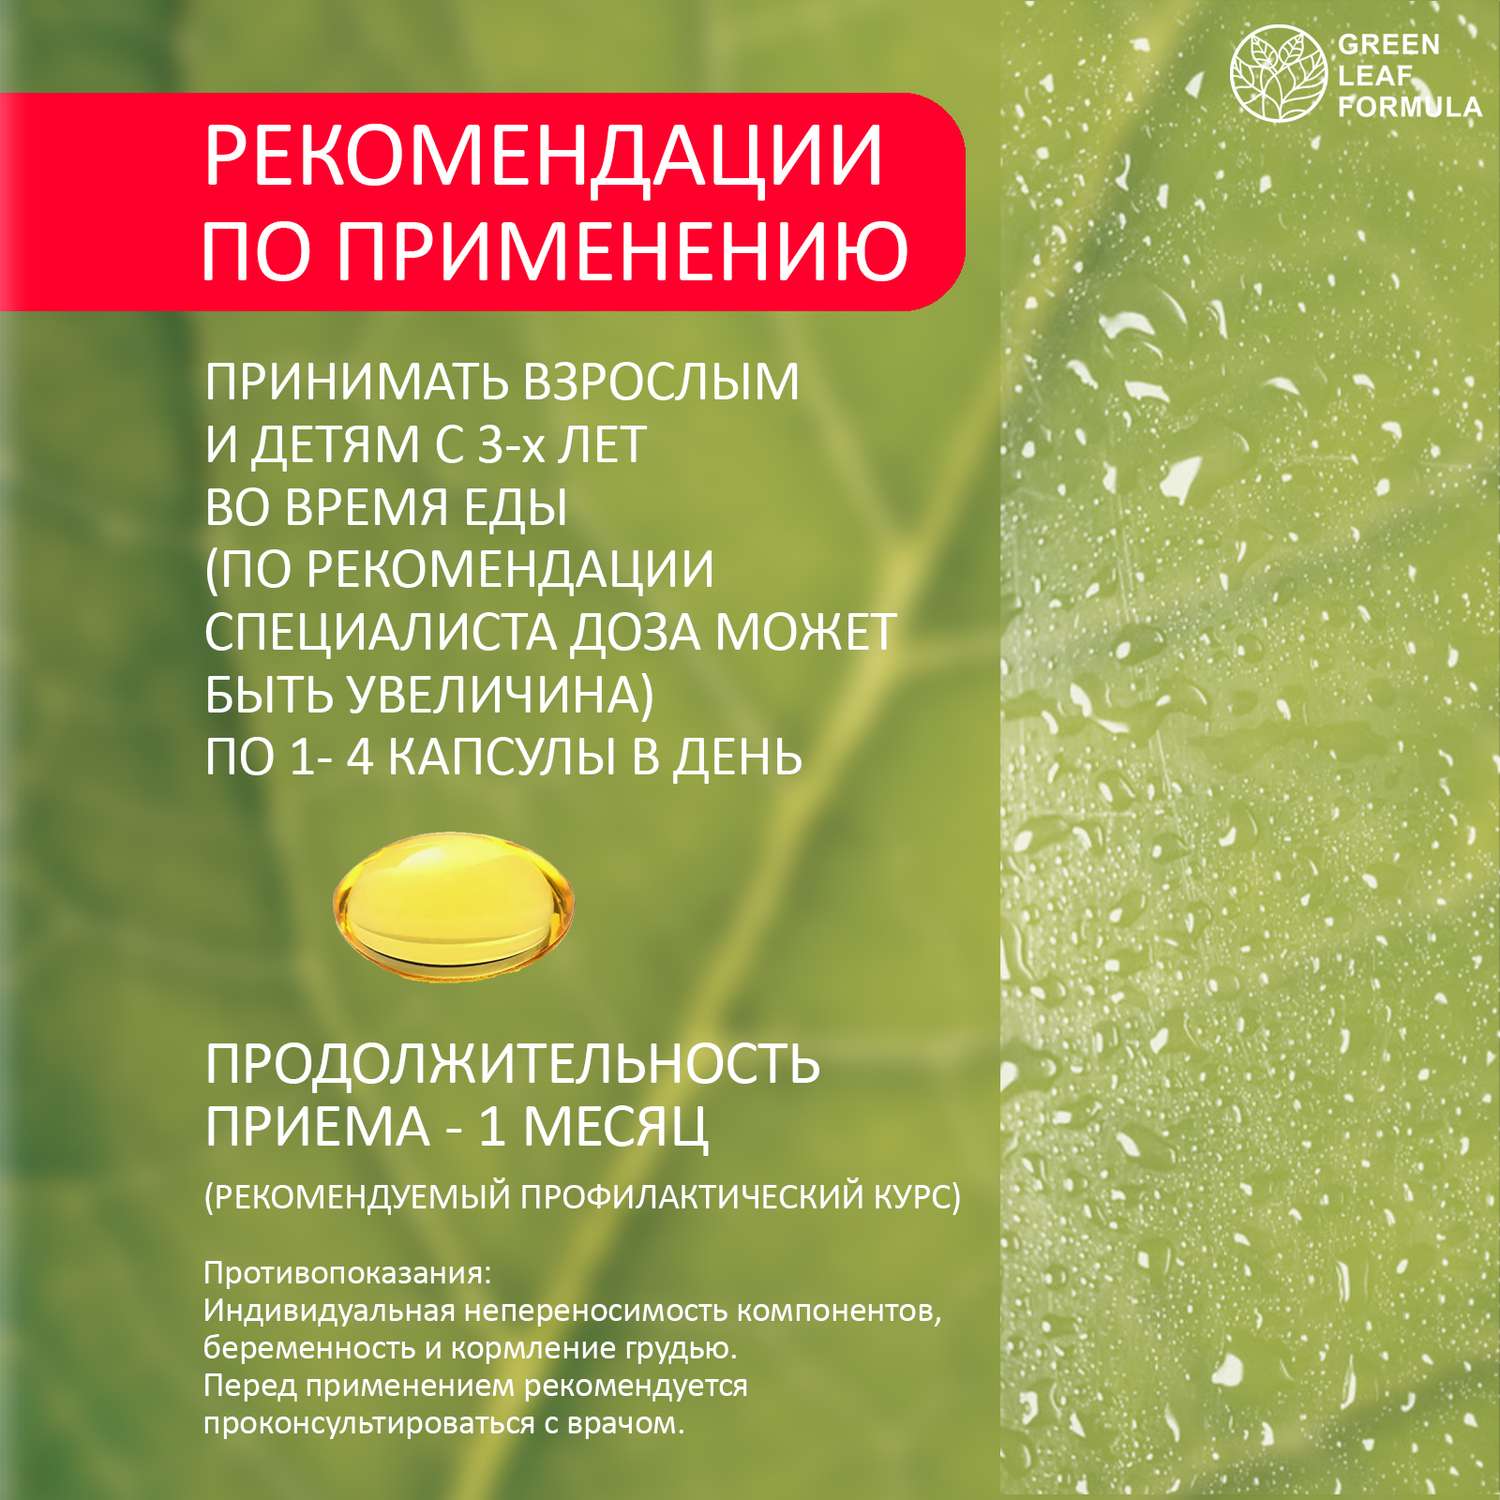 ОМЕГА 3 витамины для детей Green Leaf Formula рыбий жир в капсулах витамины для женщин и мужчин 2 банки - фото 8